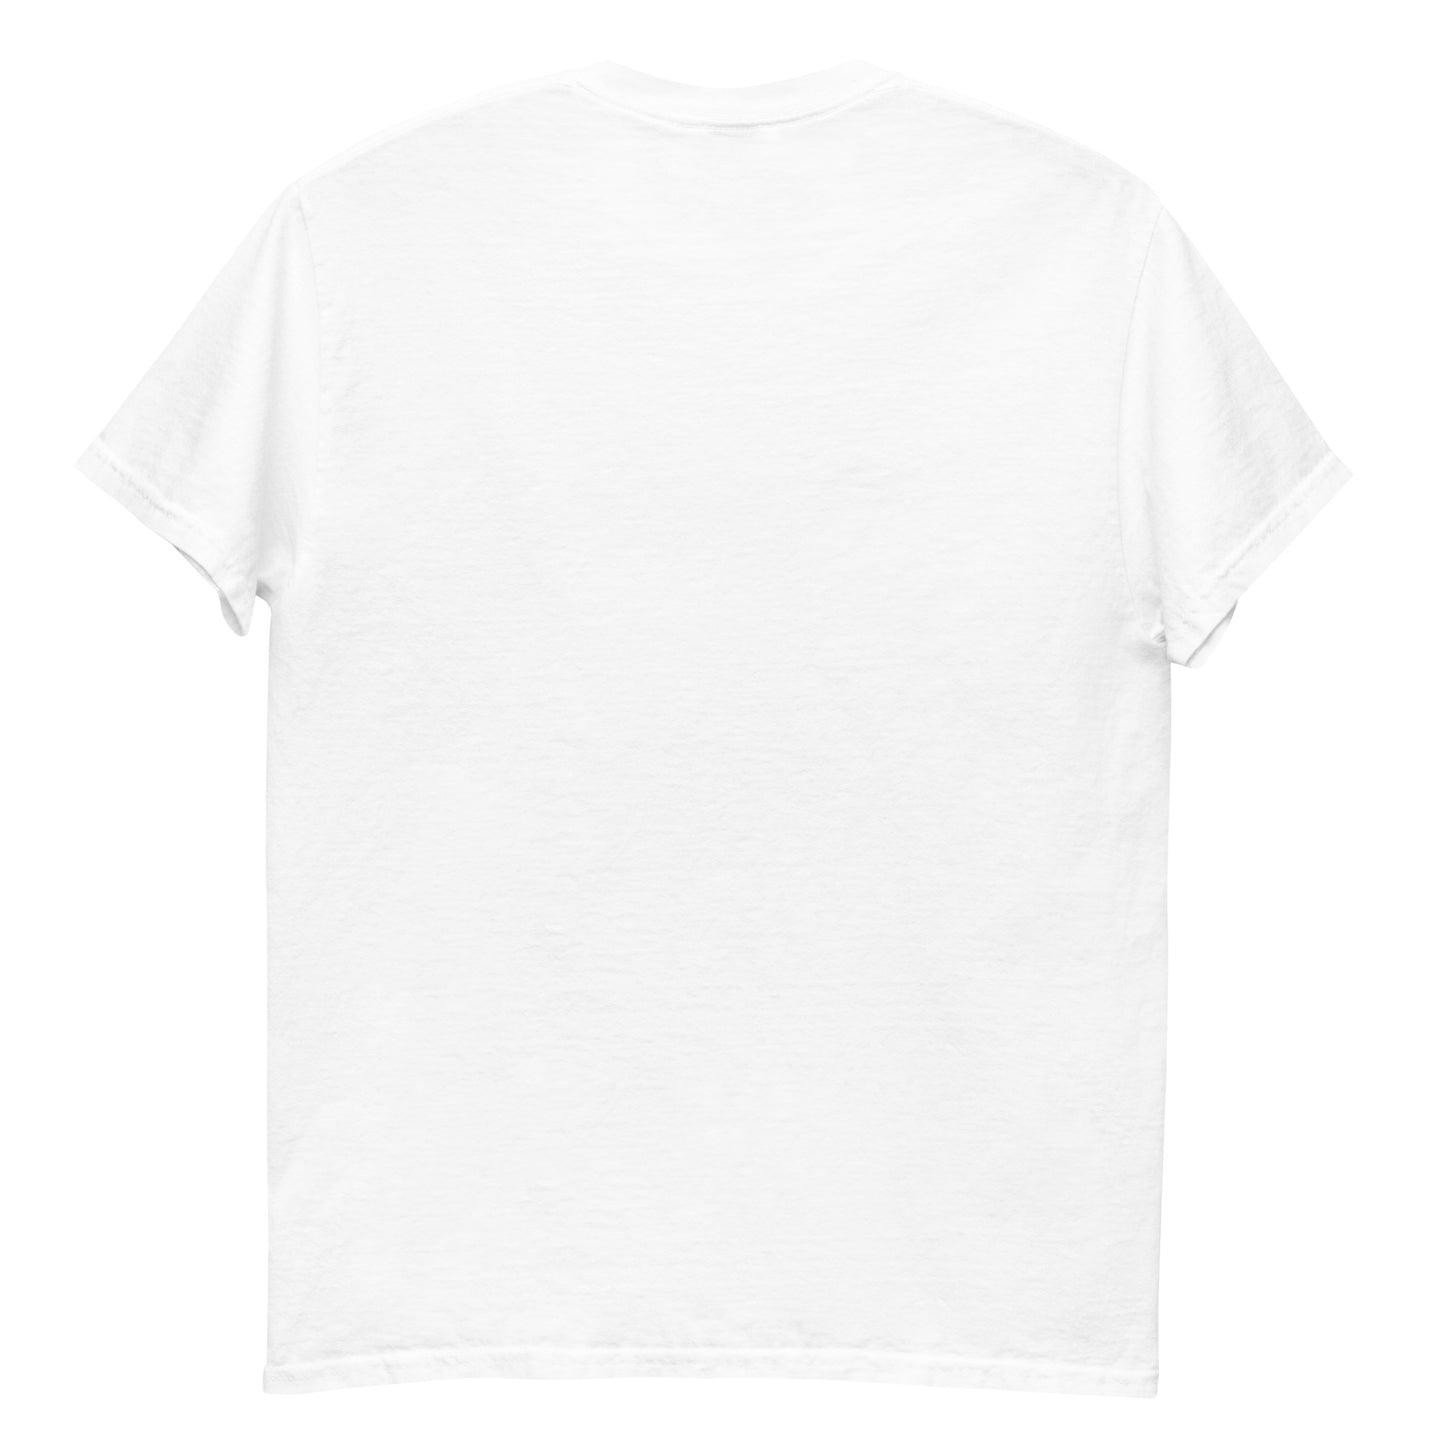 ImportWorx Embroidered Centered Checkered White Tee Shirt XXL